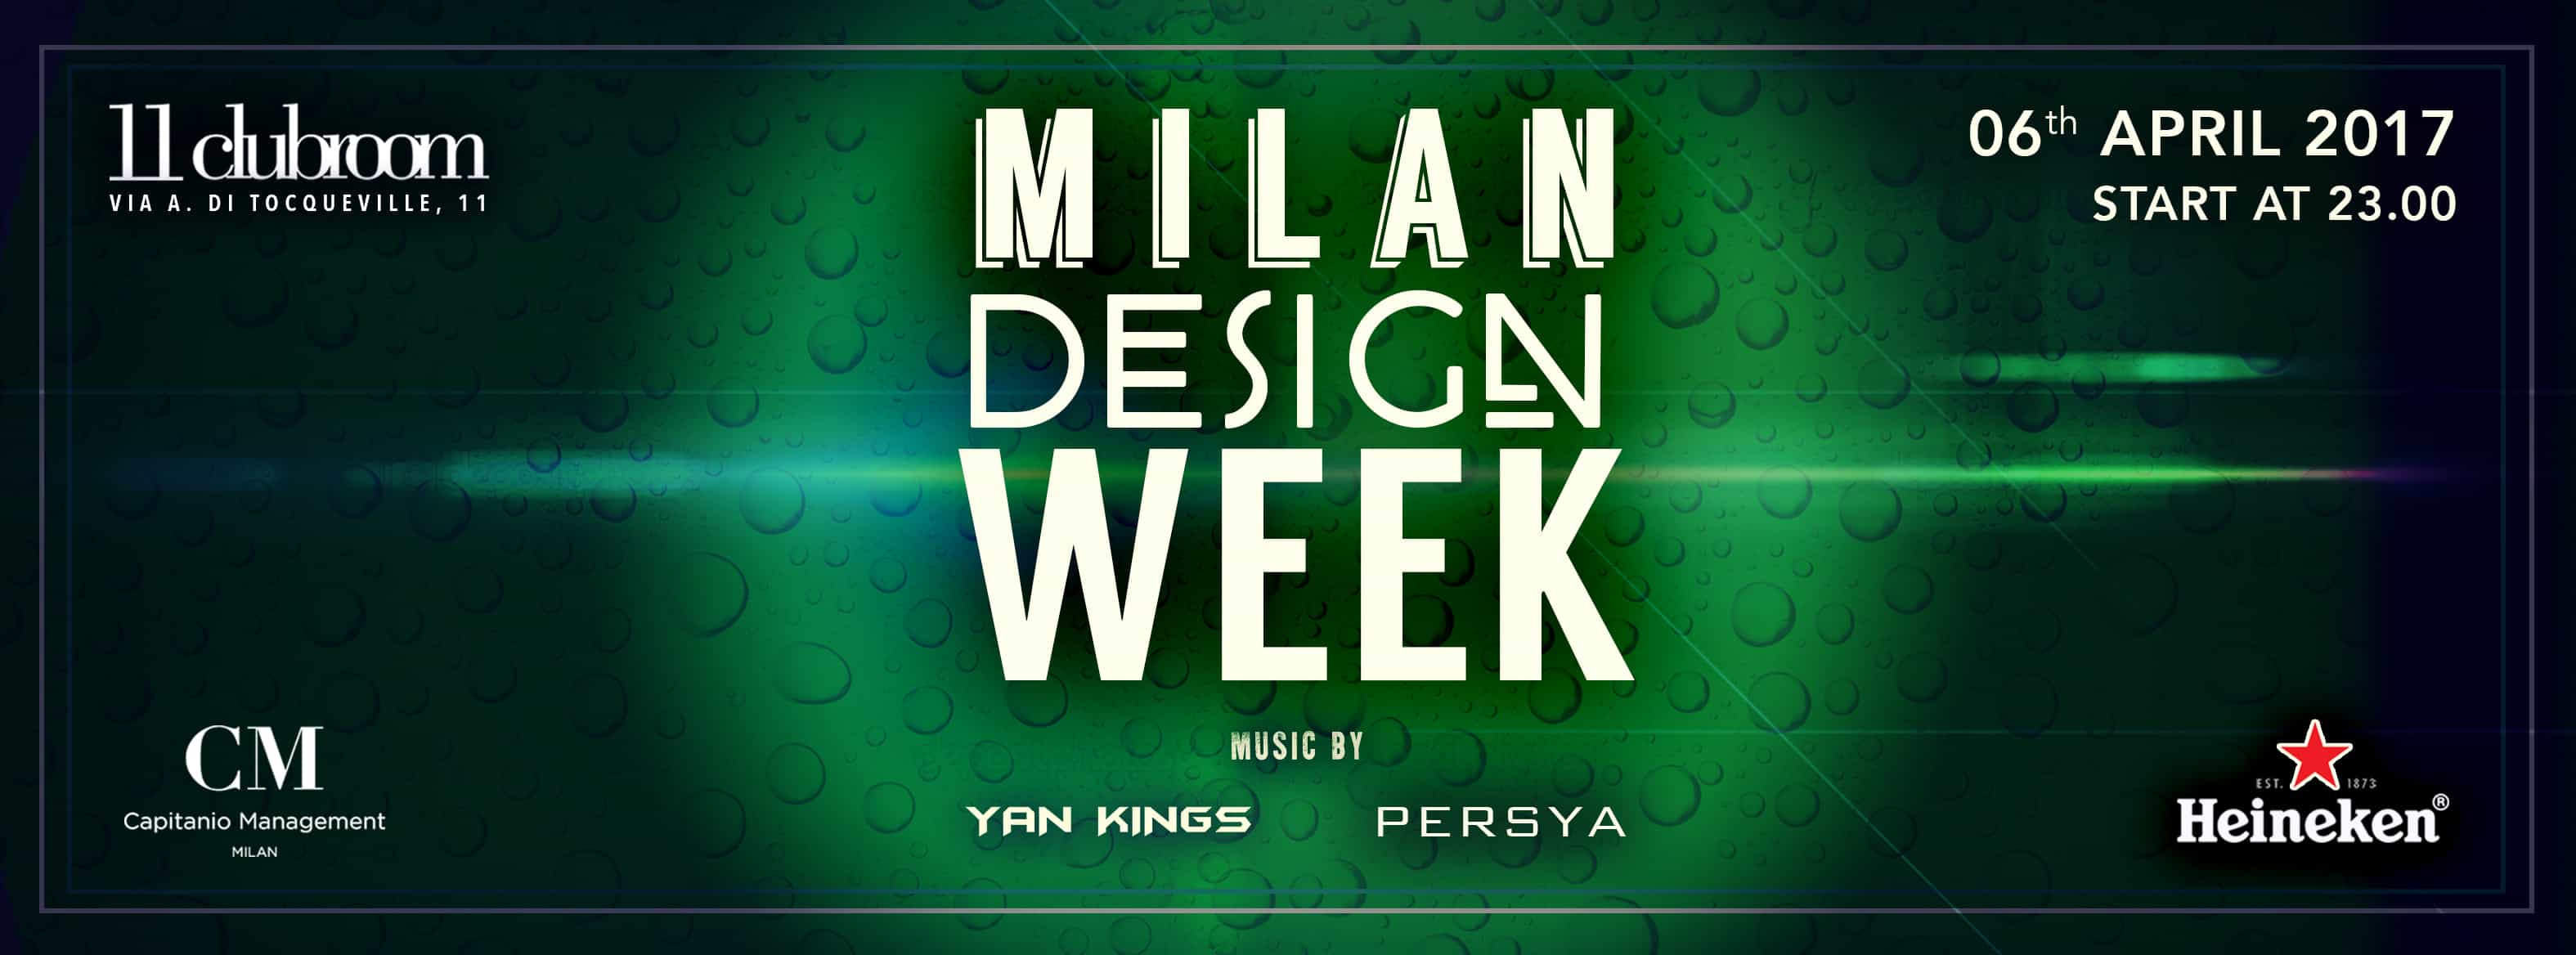 milan design week heineken Party